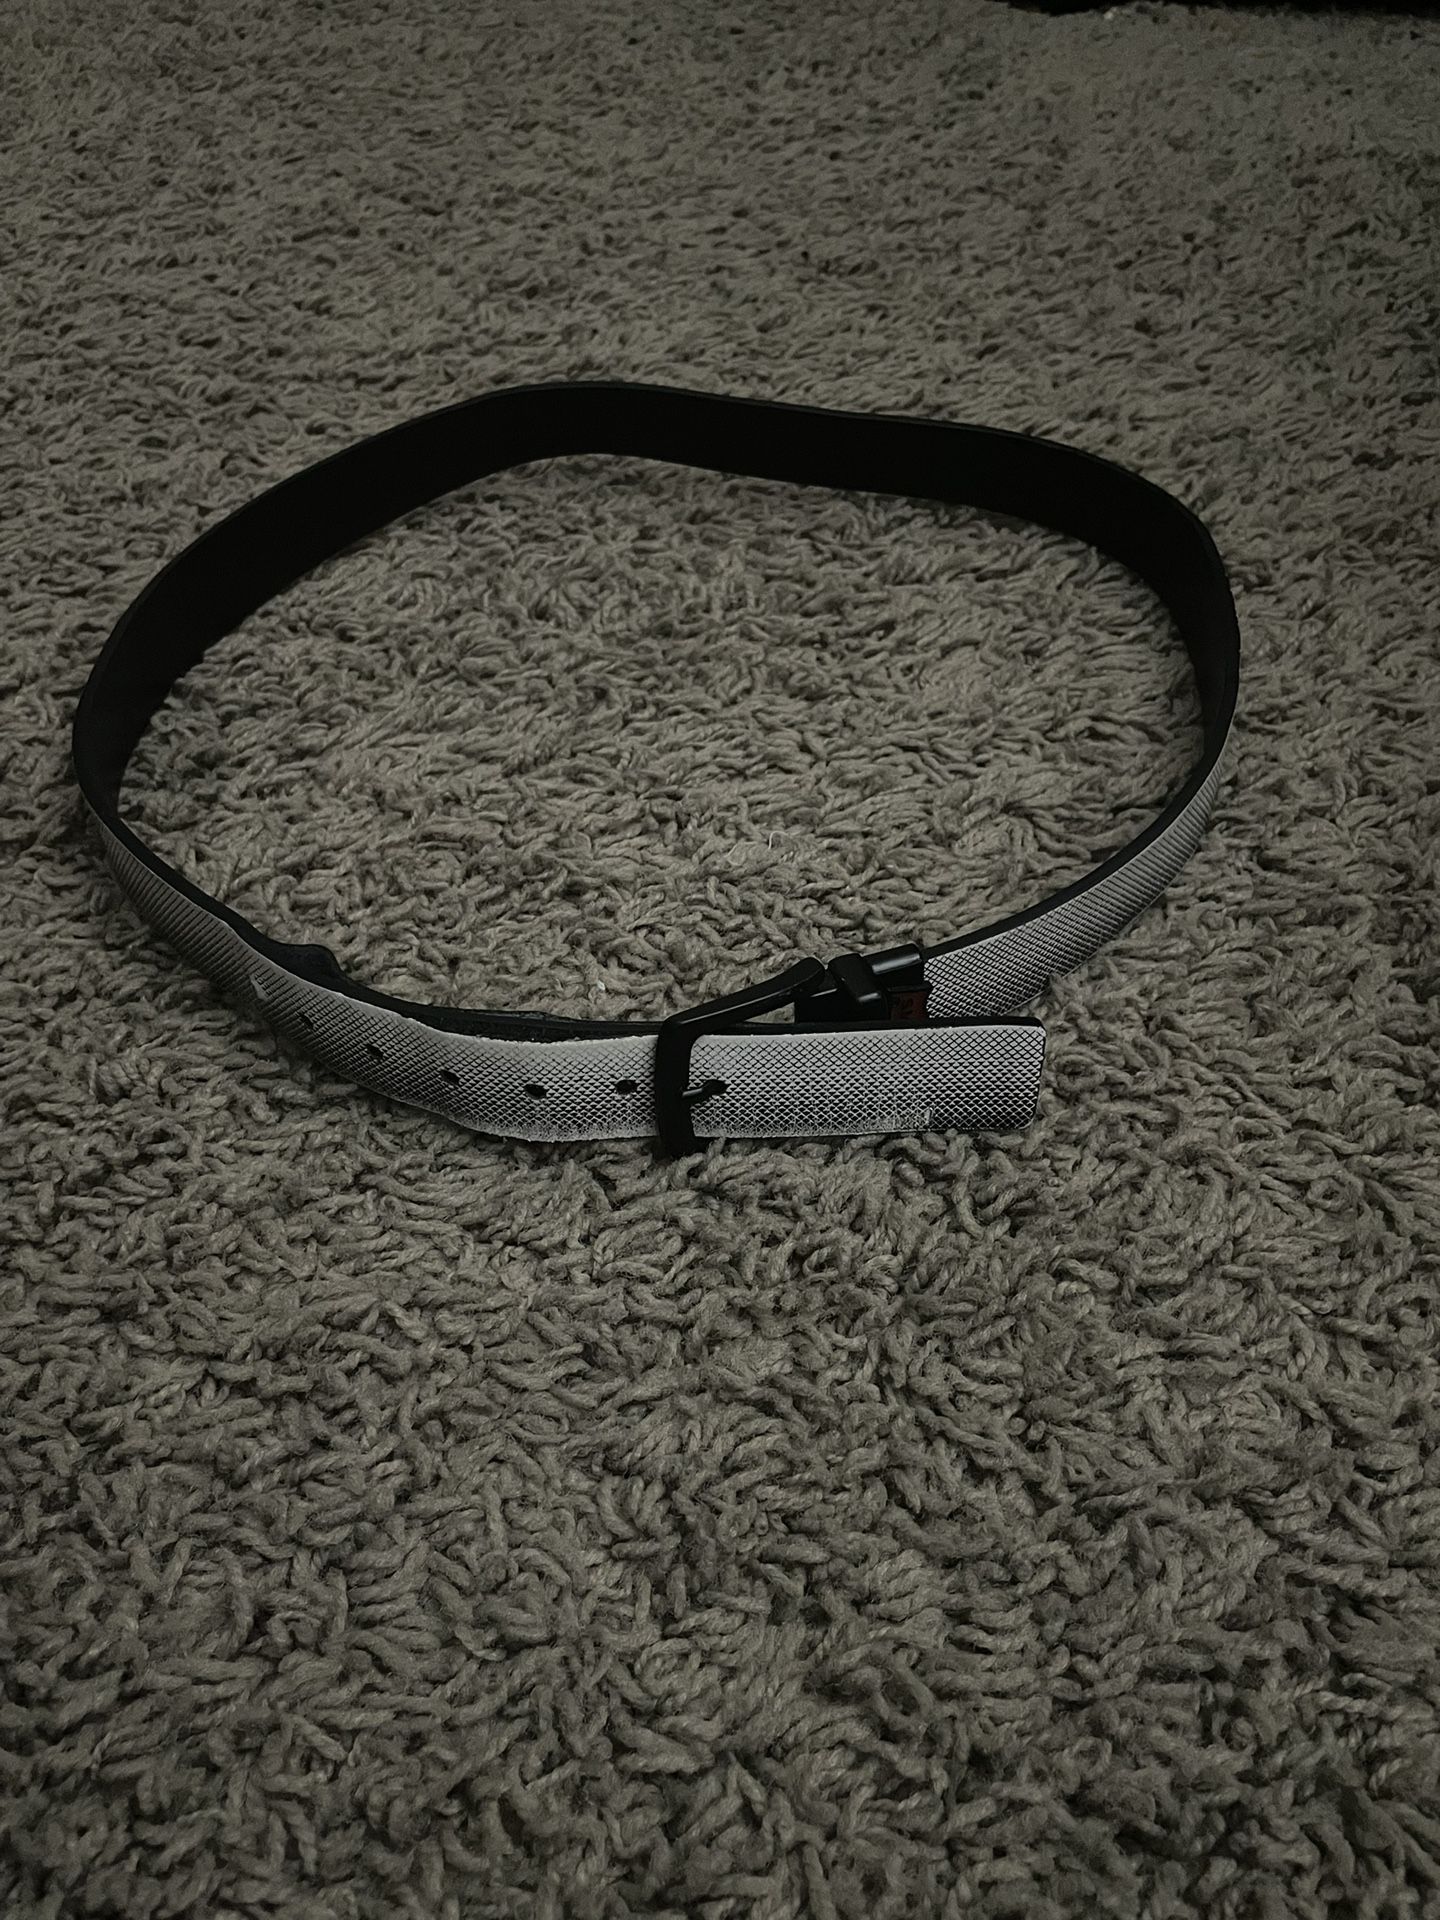 Levi's belt